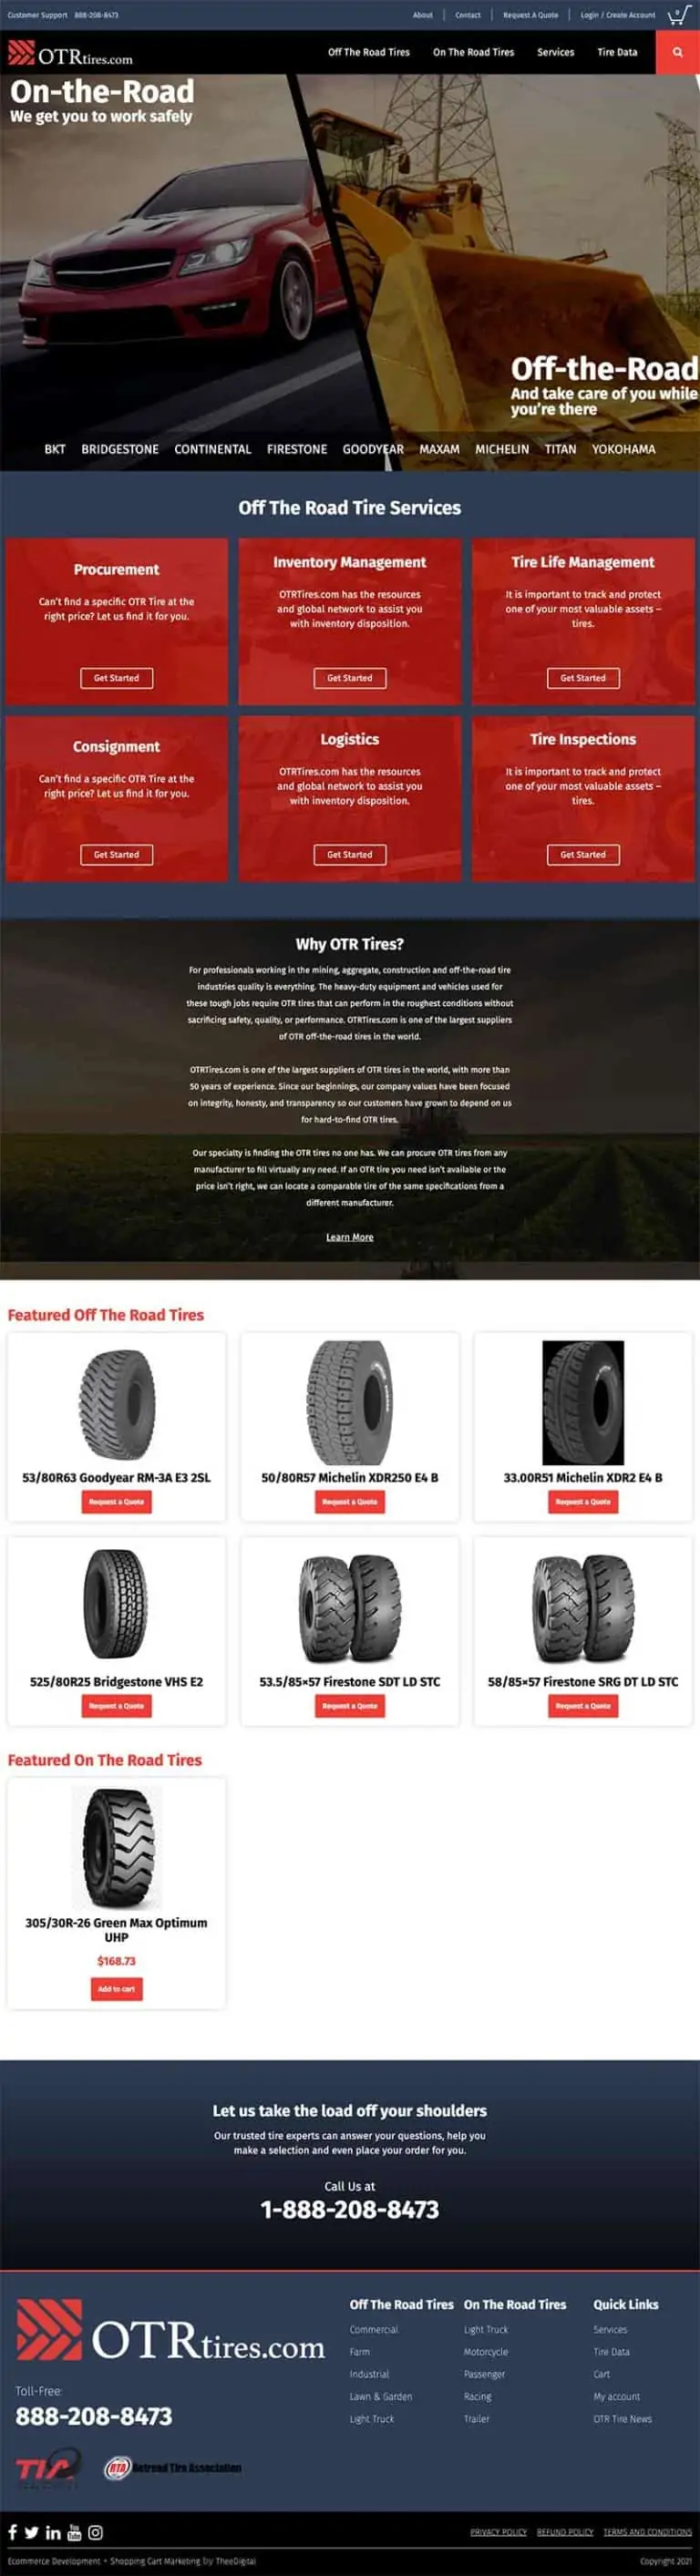 Custom Web Design for Online Auto Parts Company